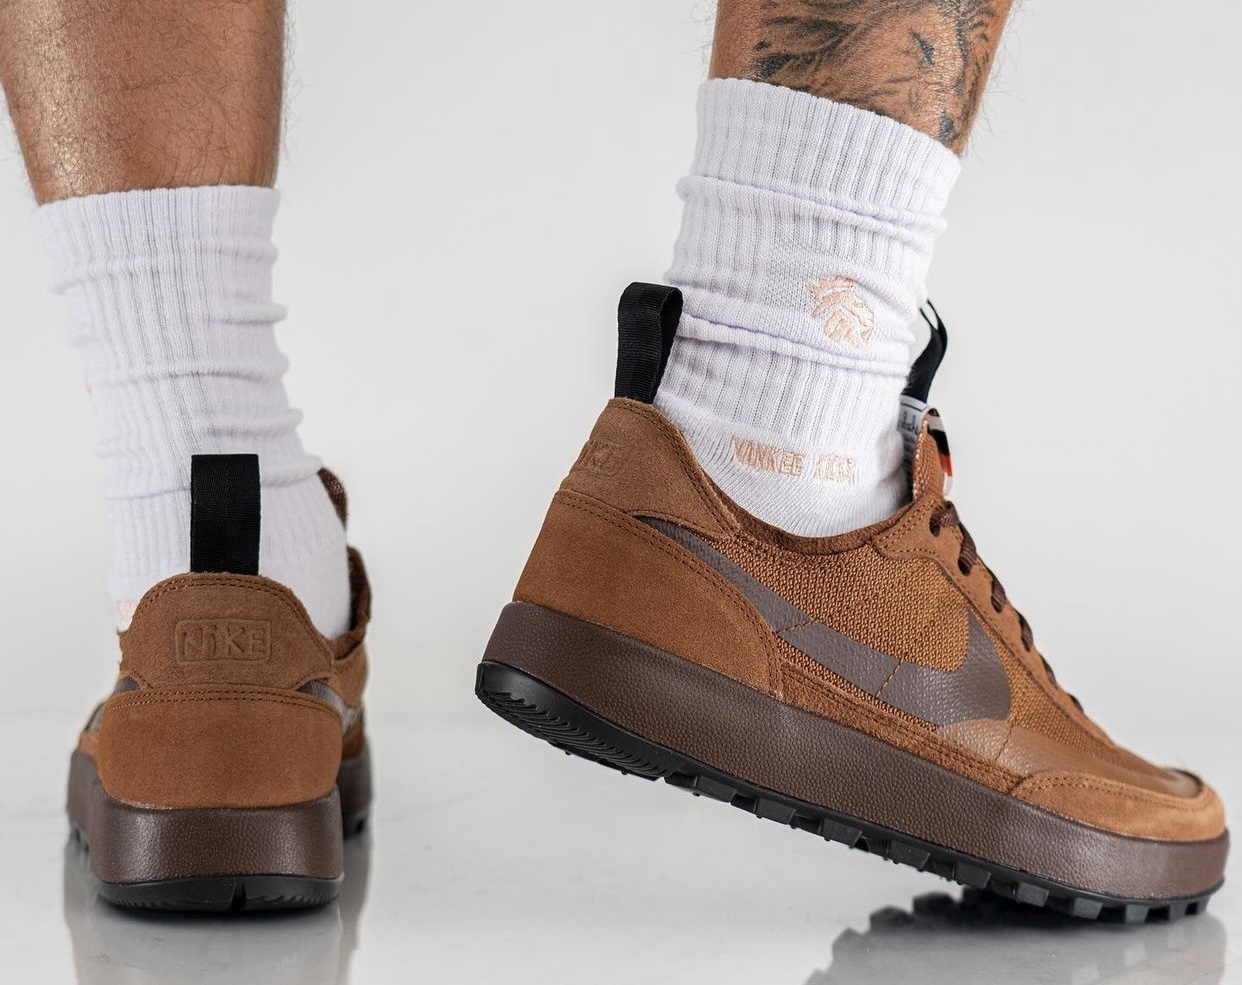 Tom Sachs x NikeCraft General Purpose Shoe Brown DA6672 201 Release Date On Feet 6